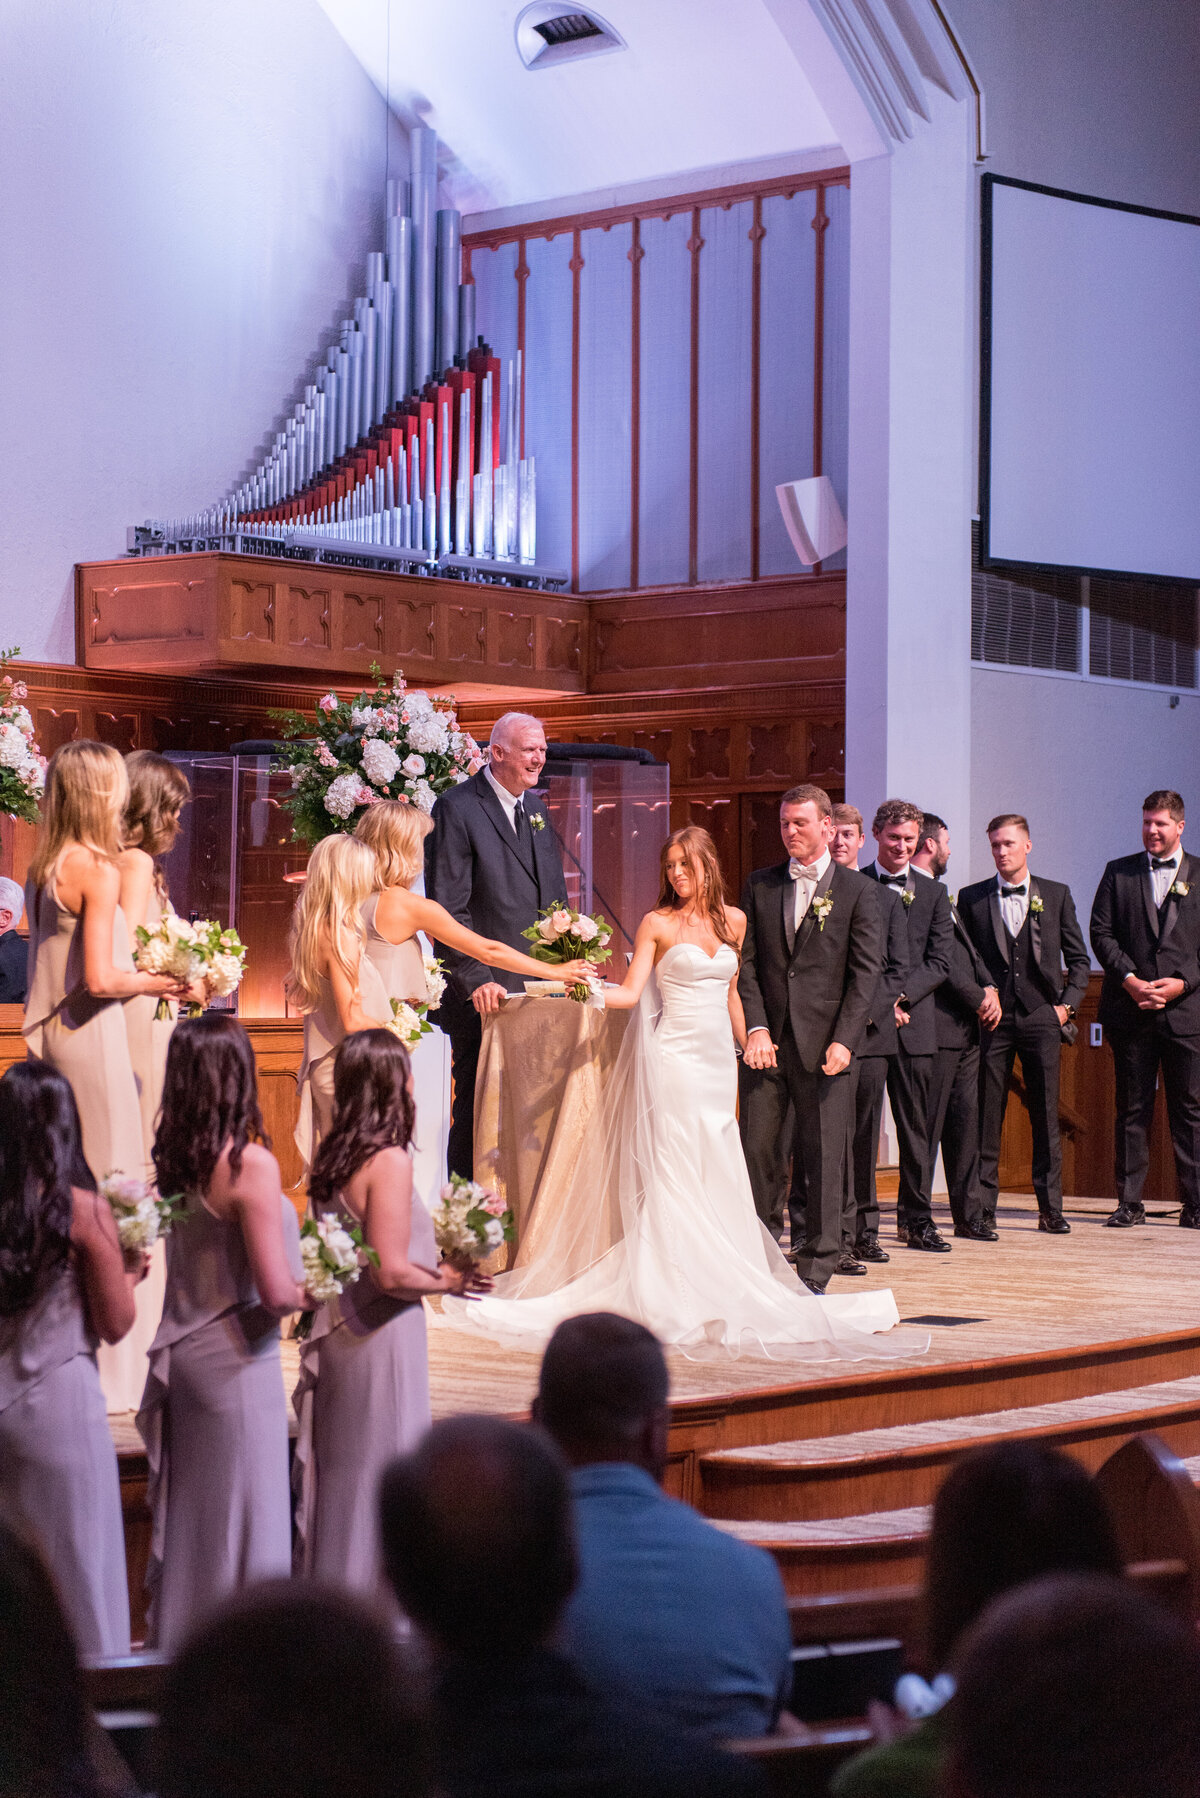 353_Alianne & Dylan's Wedding_Crmny_Lindsay Ott Photography